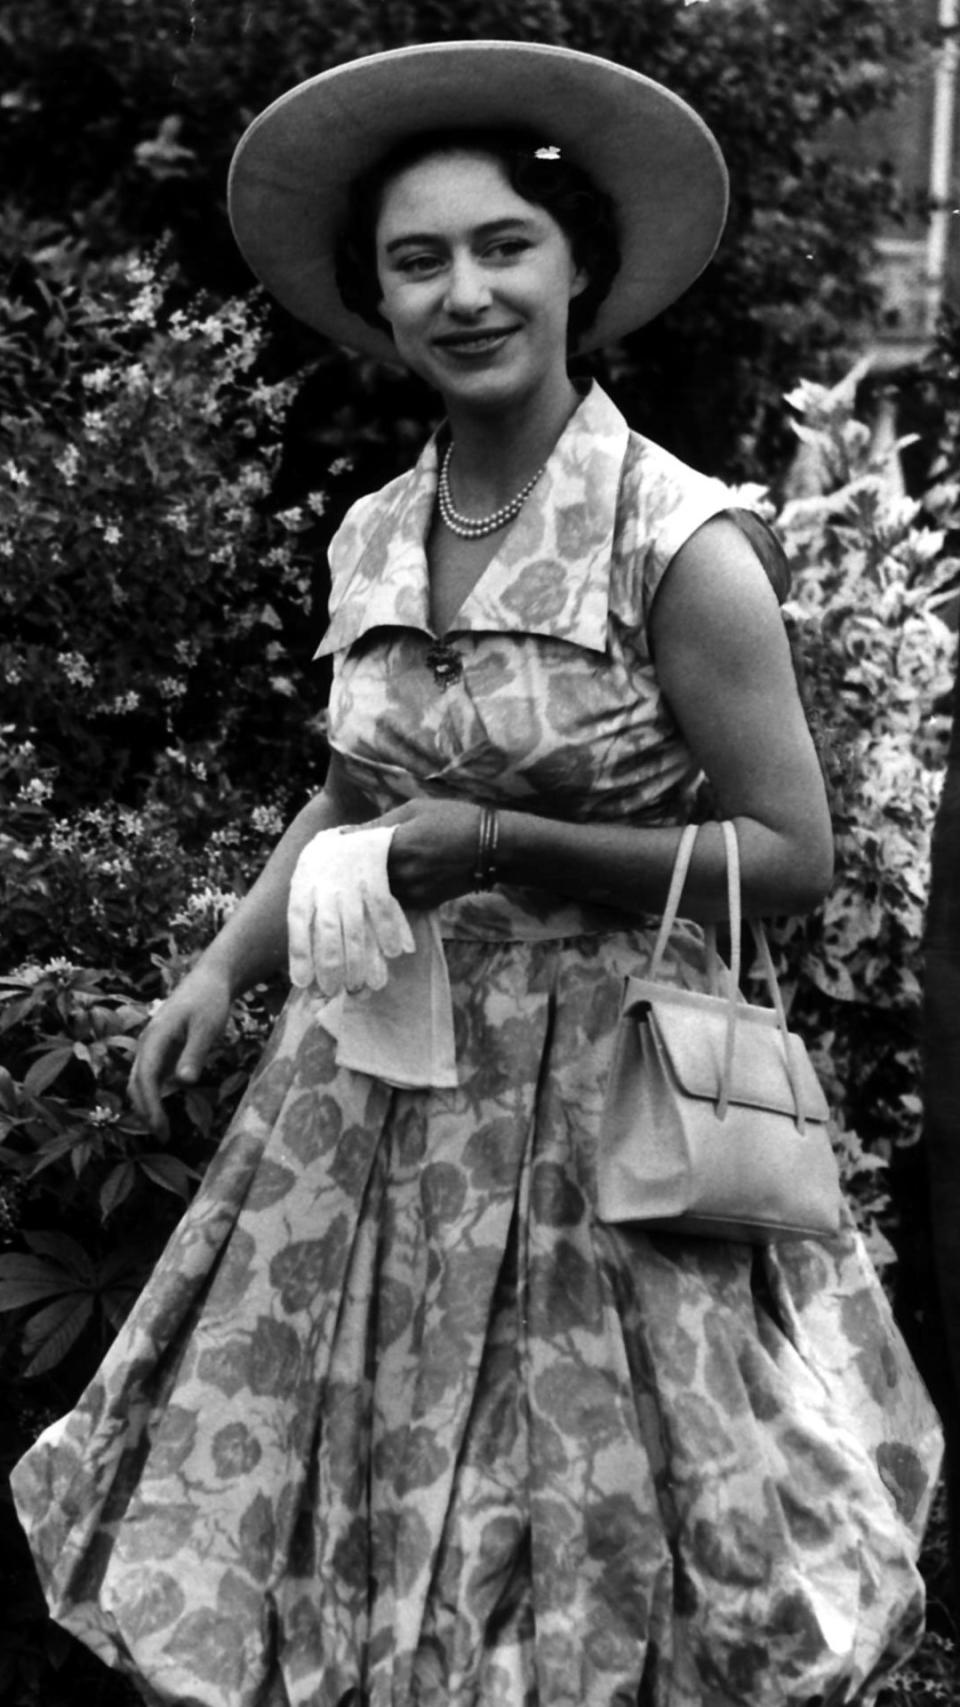 Princess Margaret wearing a floral dress in Trinidad